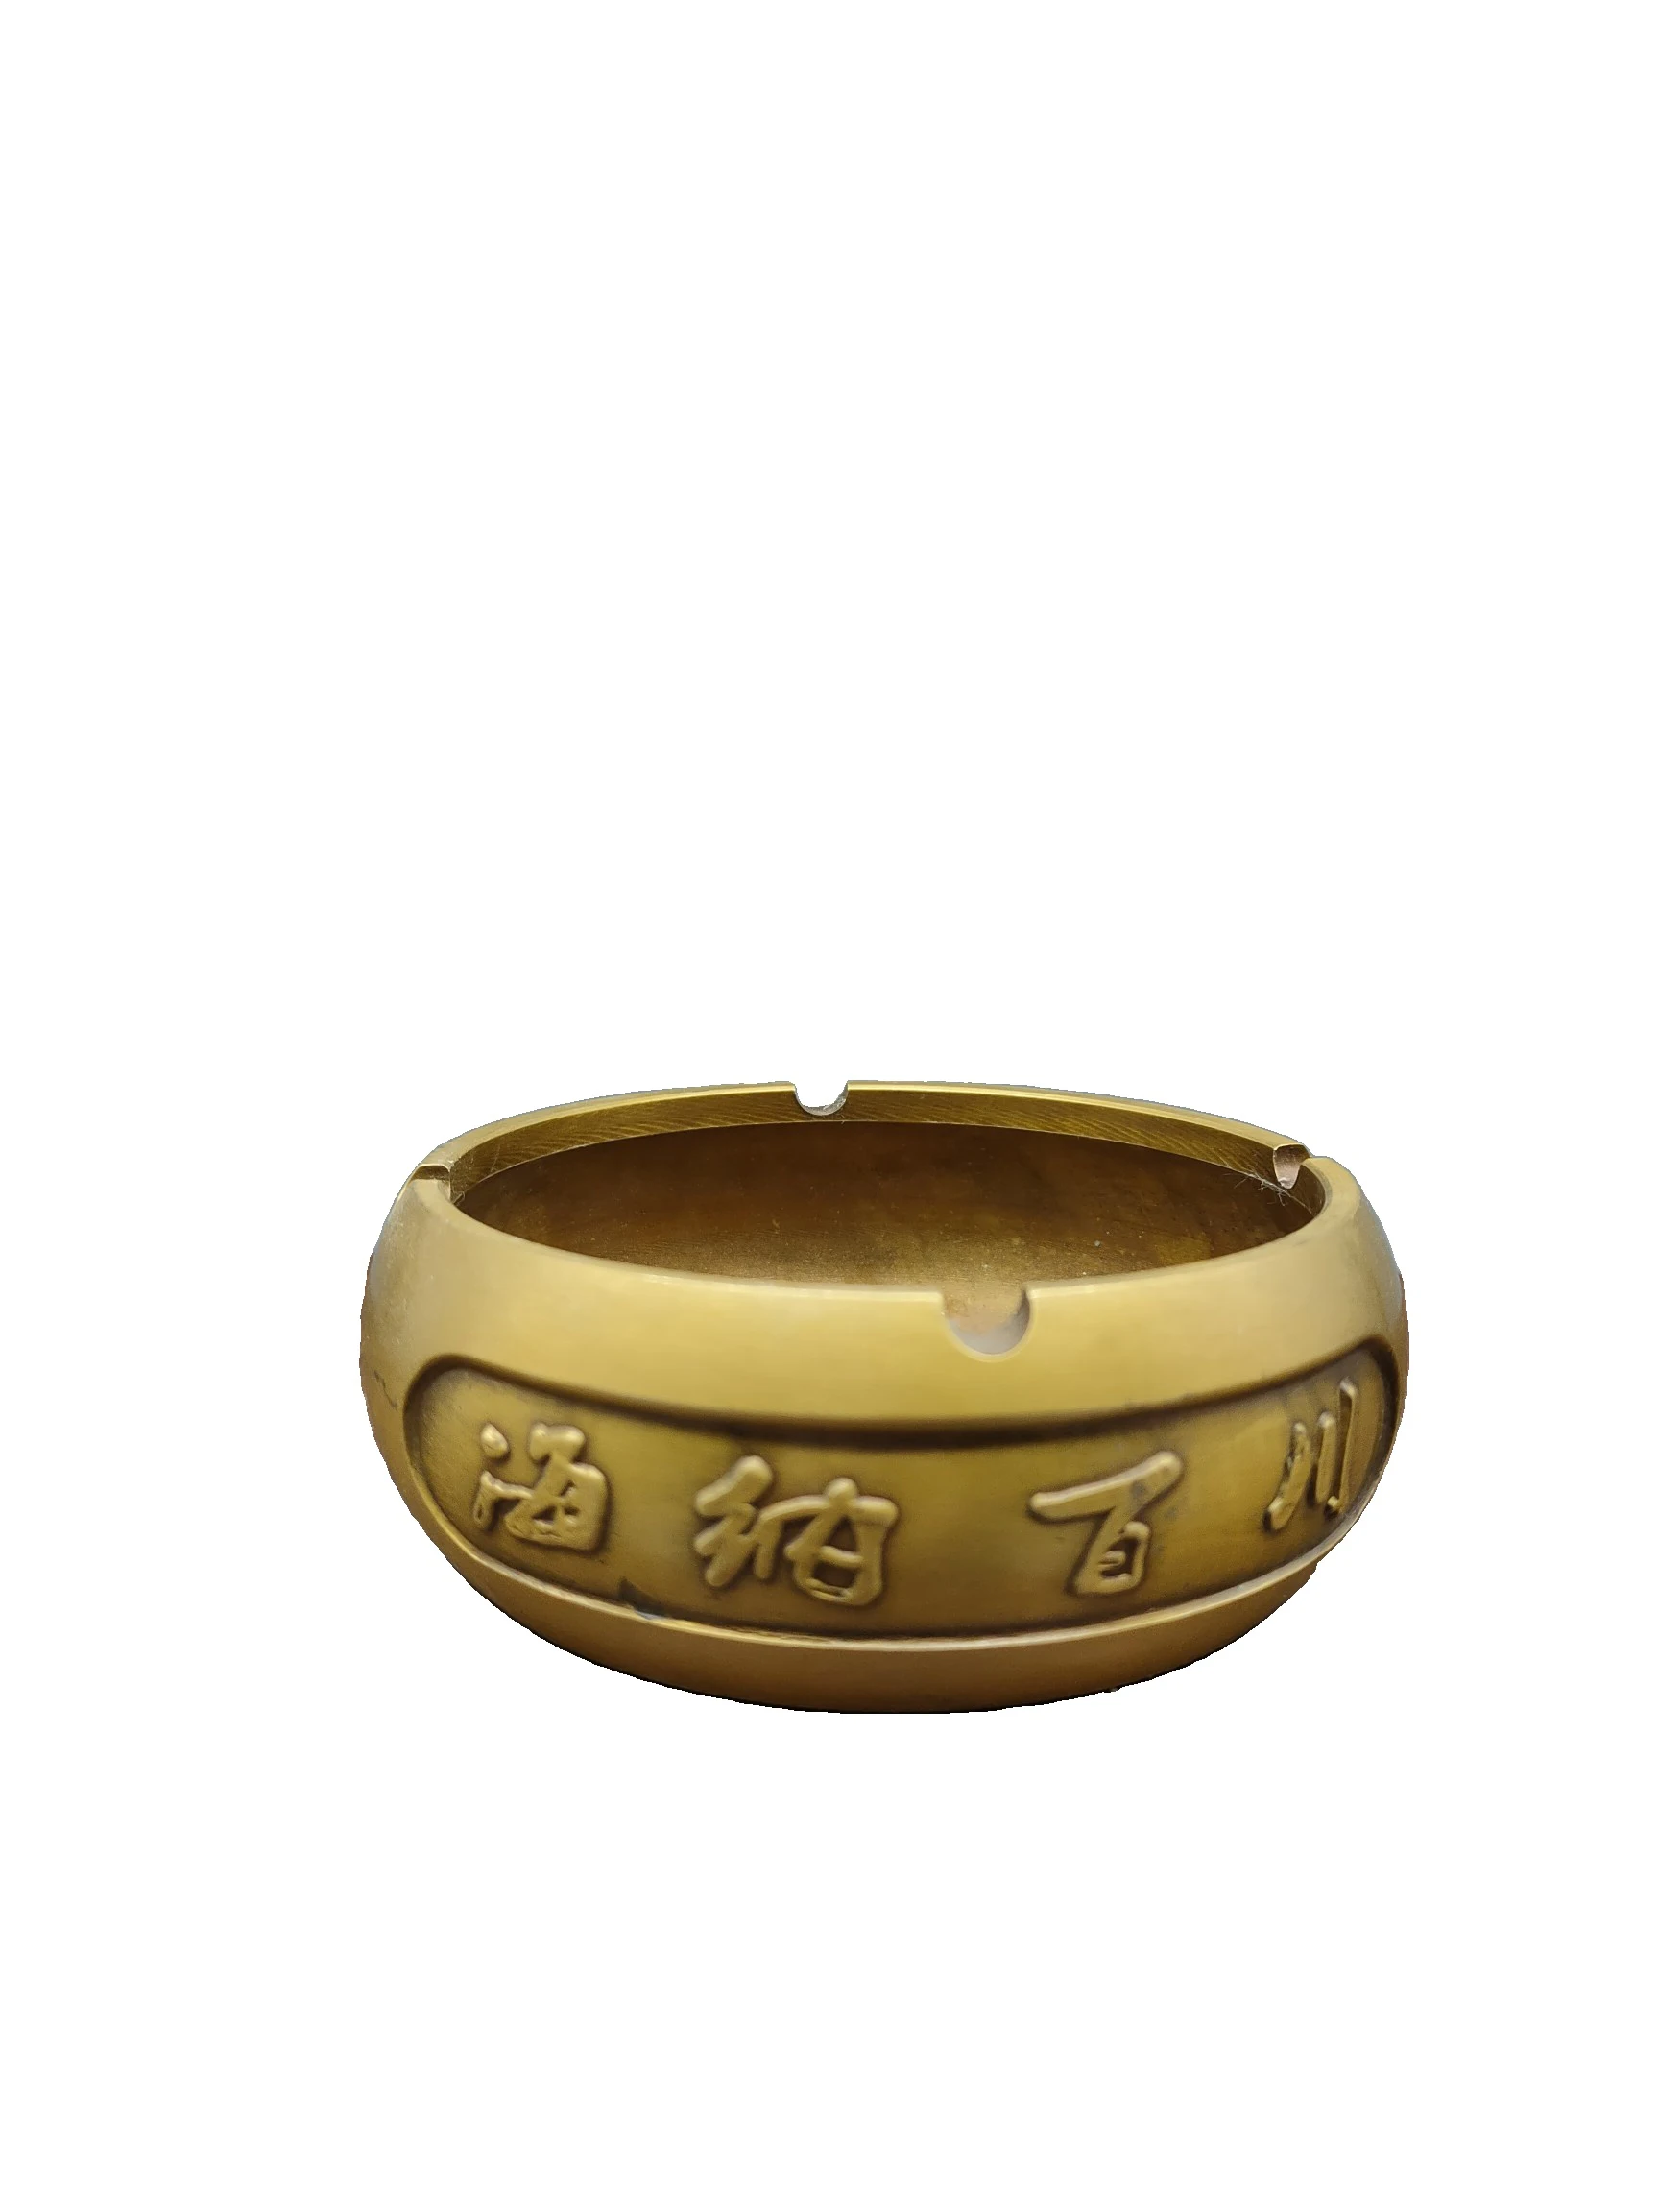 

Laojunlu Античная бронзовая коллекция Hai Nan Bai Chuan, дымовая банка, Античная бронзовая коллекция шедевров, коллекция китайского солдатика